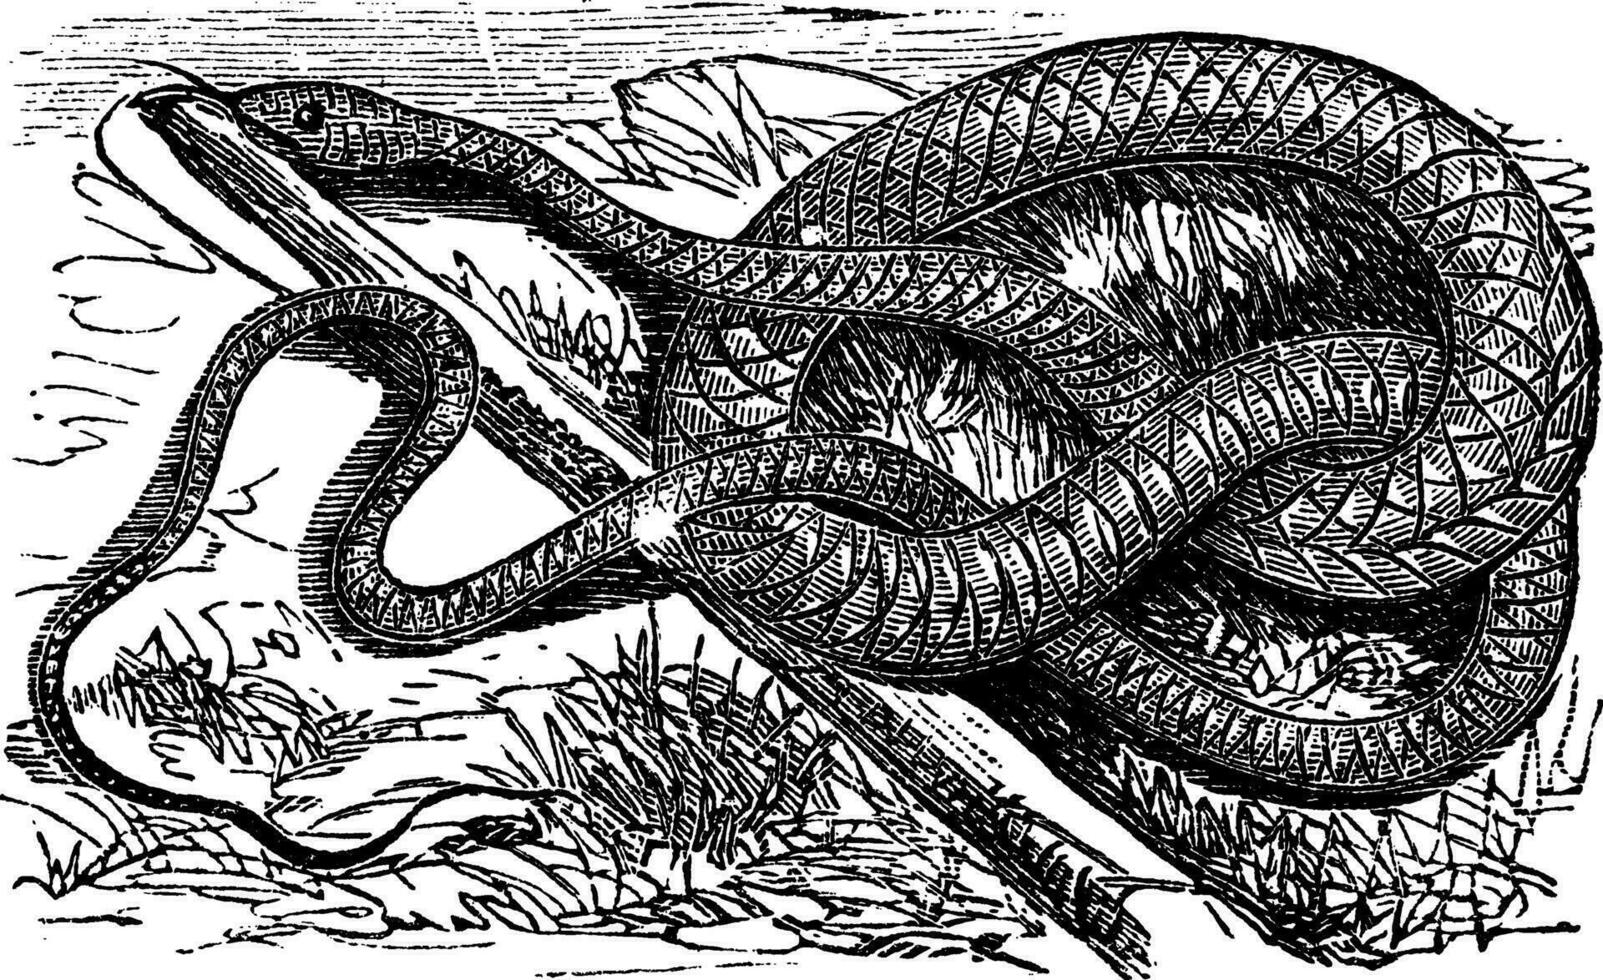 serpiente látigo o látigo o masticophis flagelo, Clásico grabado vector